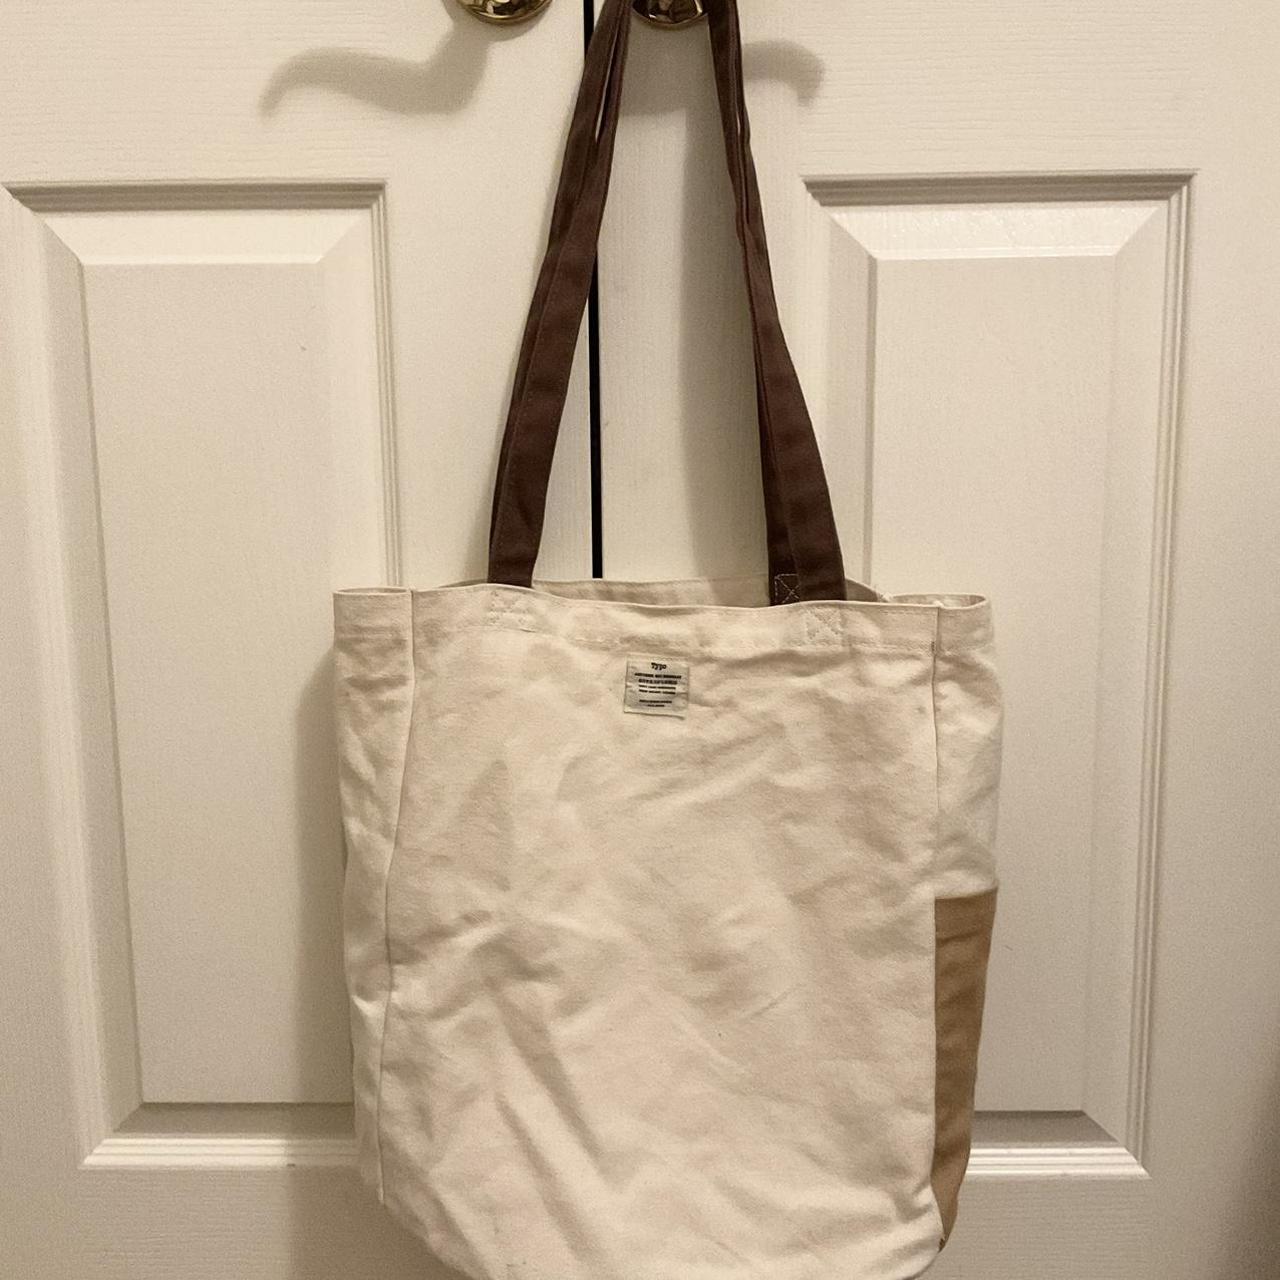 Typo Women's Cream and Brown Bag